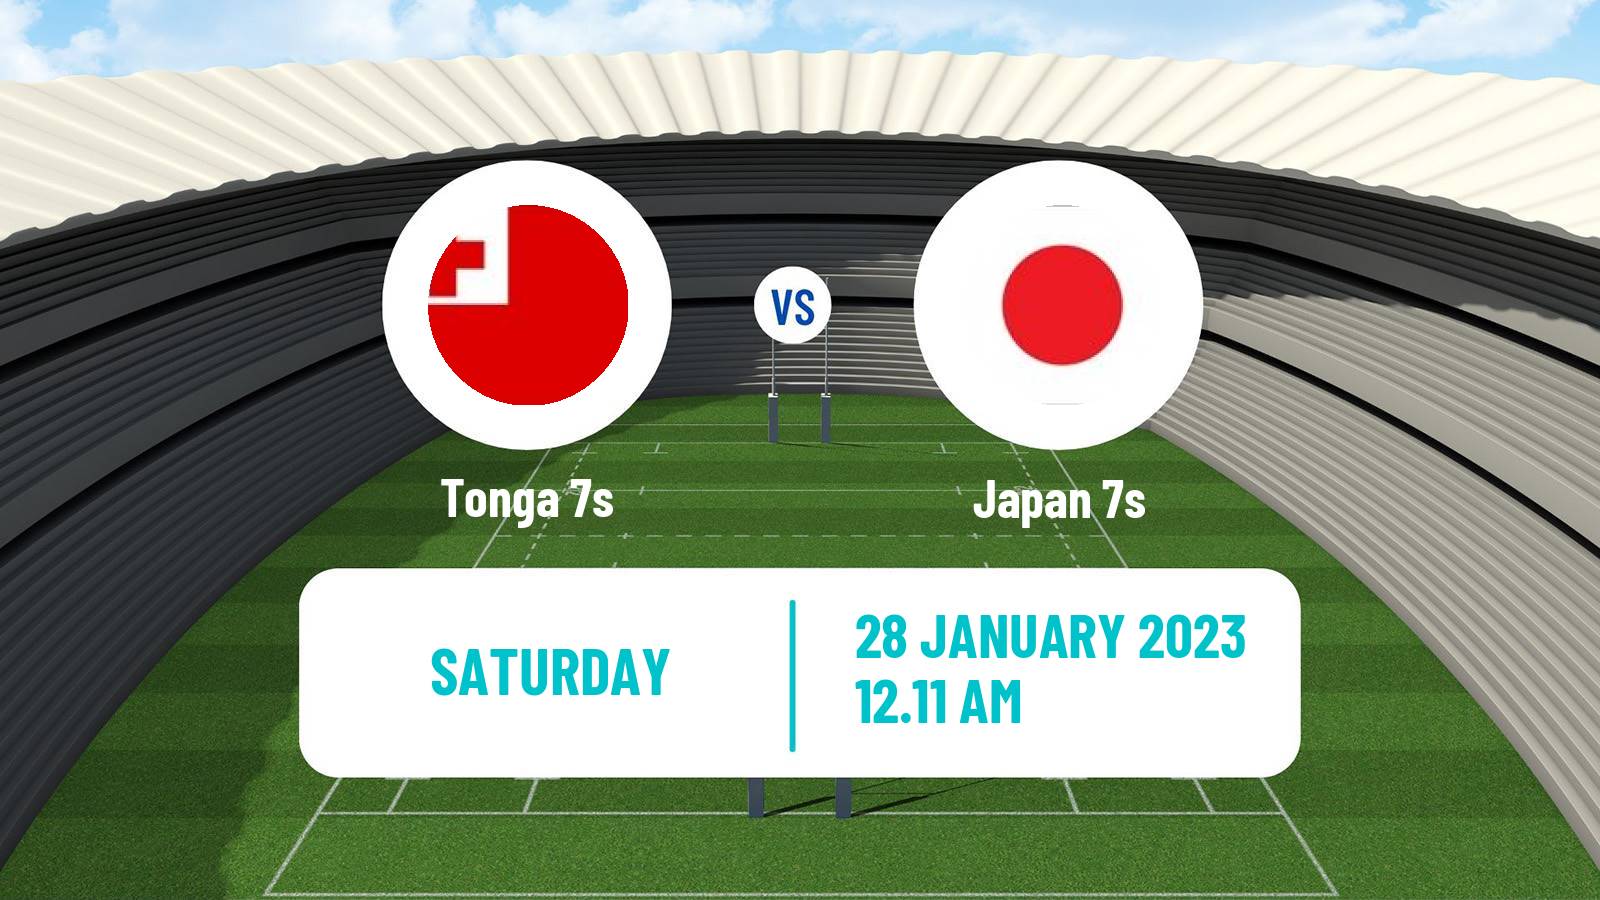 Rugby union Sevens World Series - Australia Tonga 7s - Japan 7s